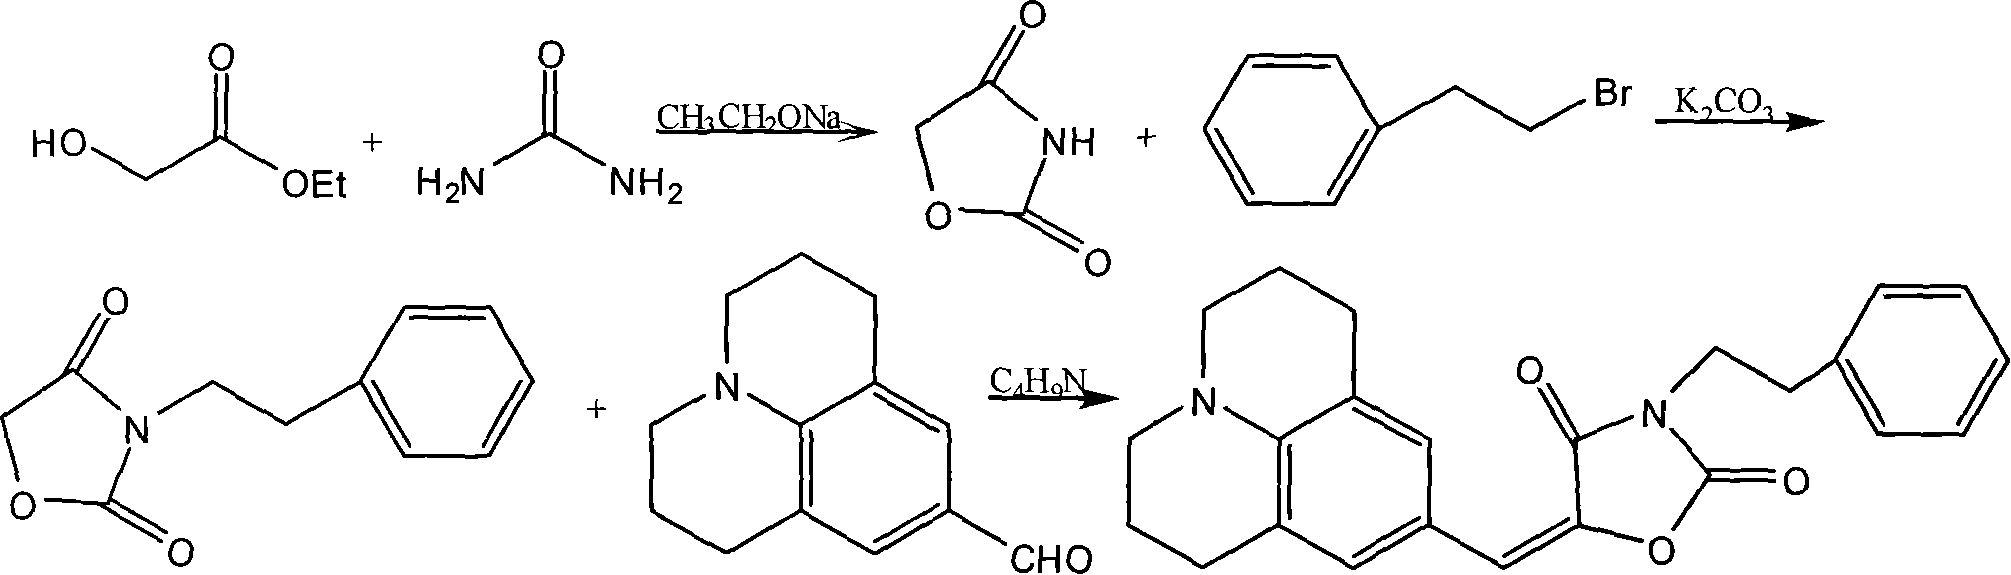 Method for synthesizing 3-(2-phenylethyl)-5-[2,3,6,7-tetrahydro-1H,5H-benzo[ij]quinolin-en]-2,4-oxazolidinedione